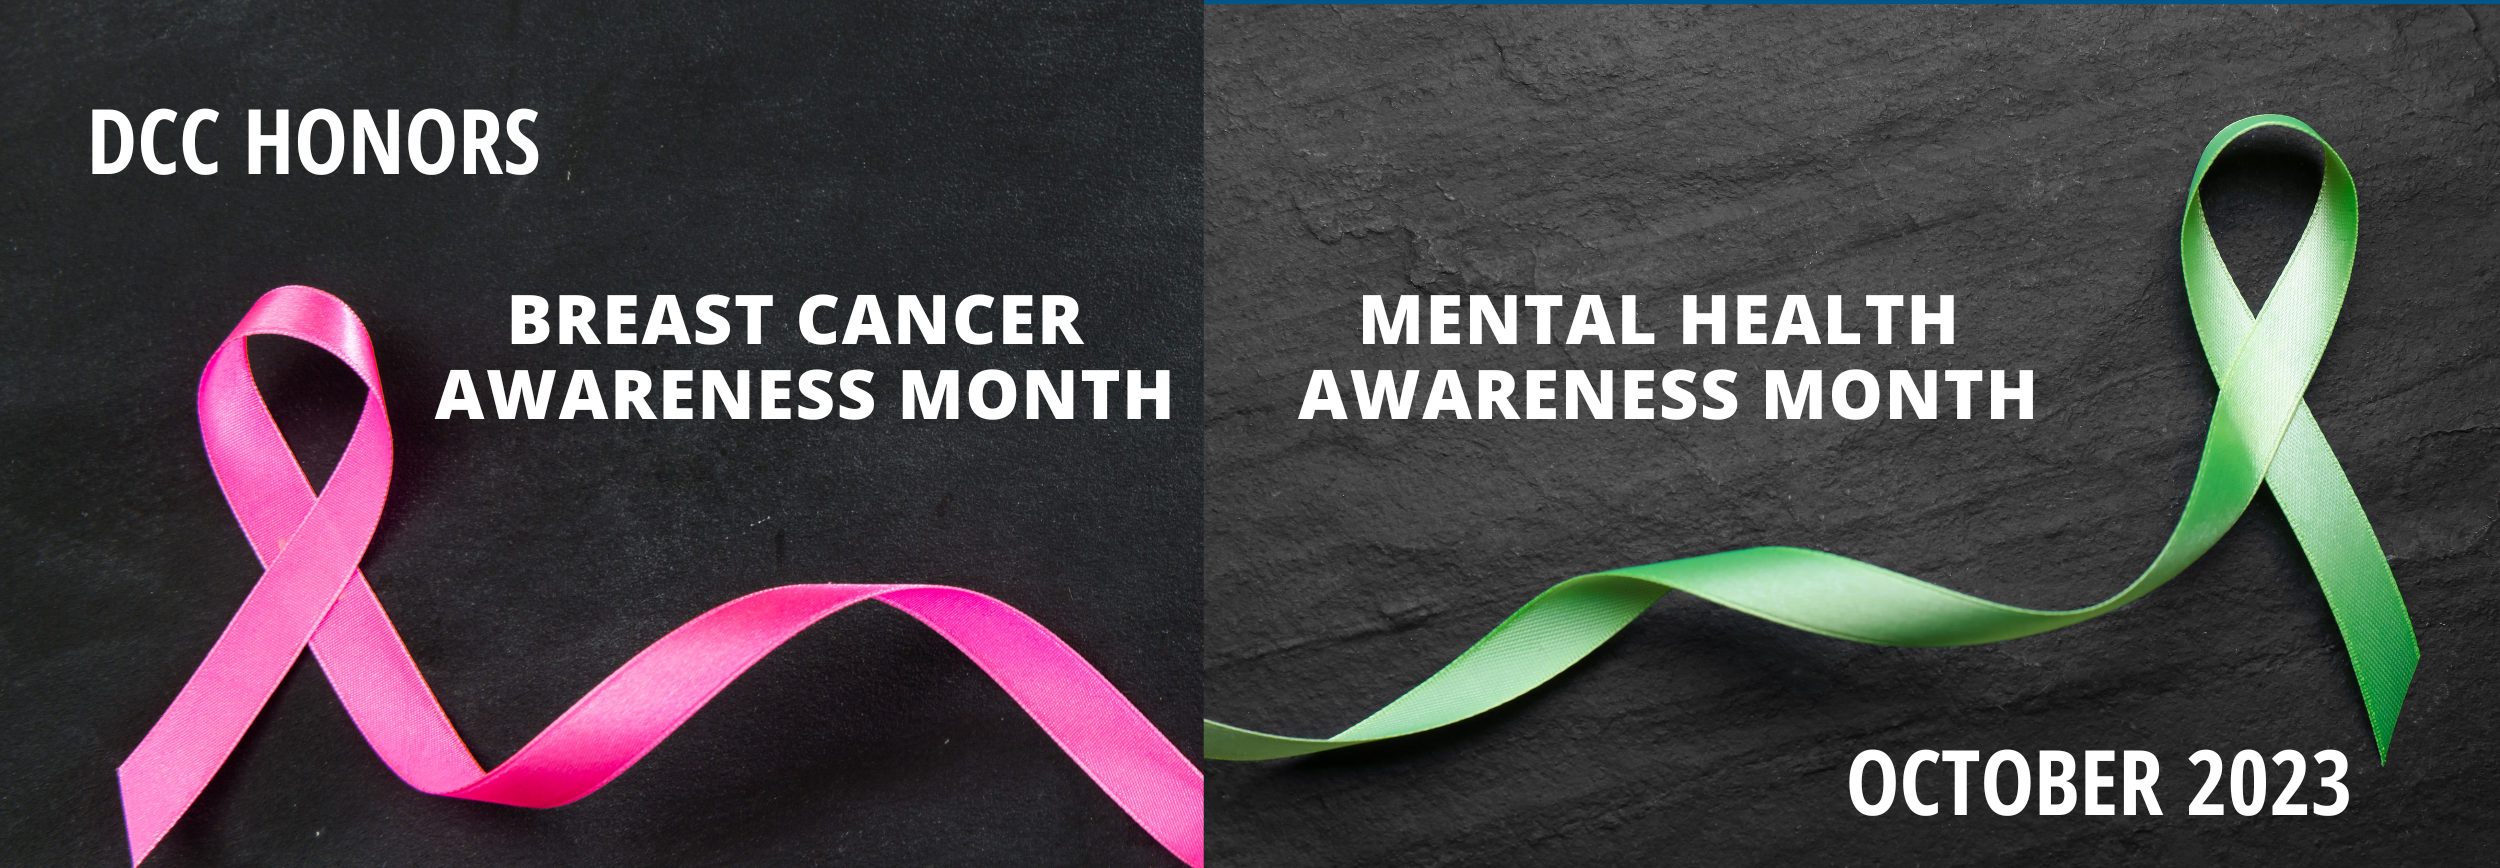 Breast Cancer Awareness & Mental Health Awareness